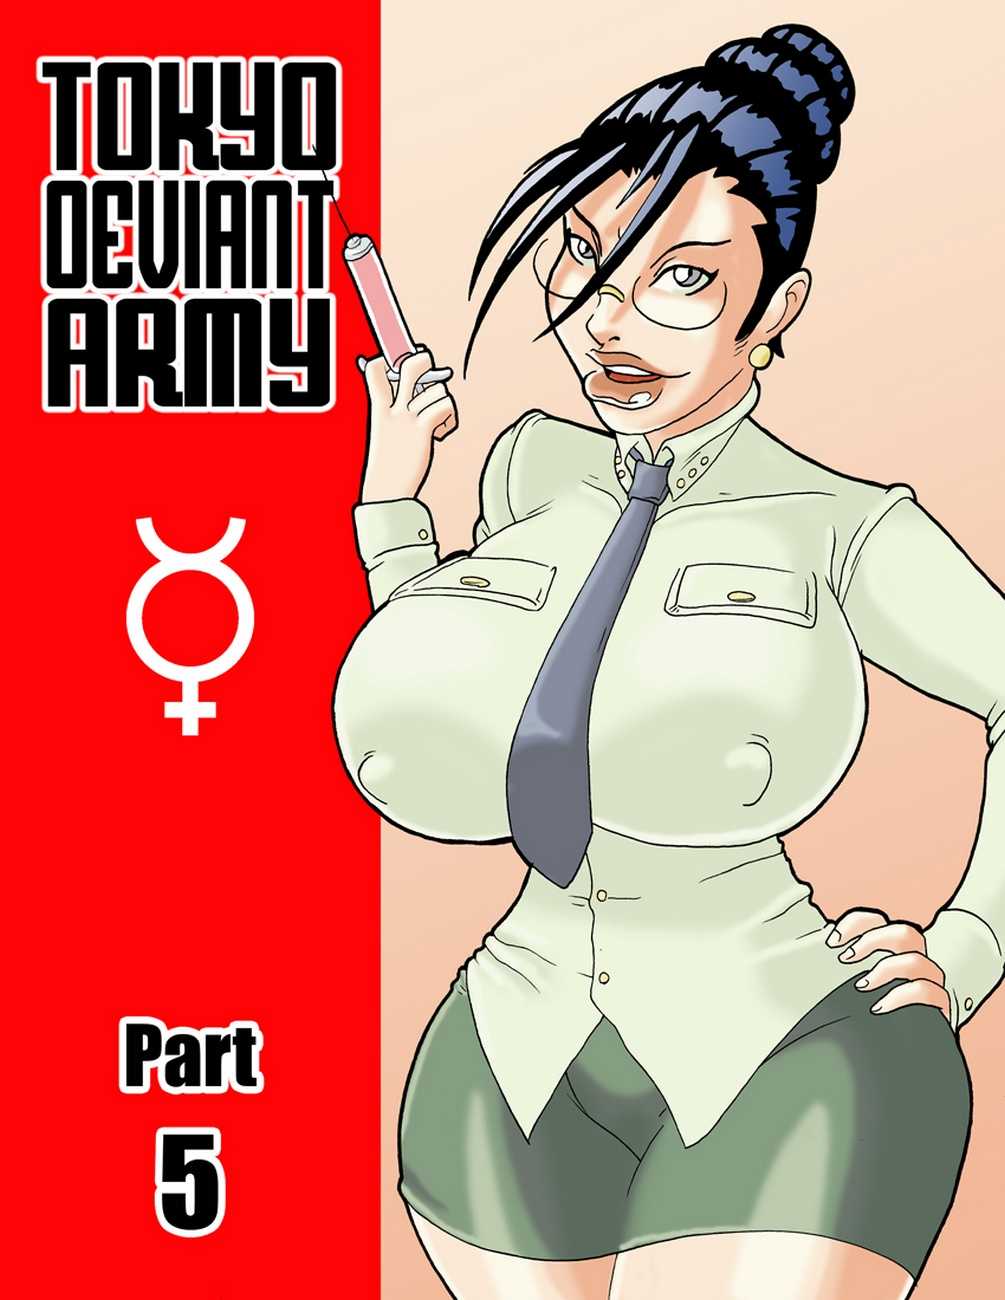 Army Cartoon - Snaketrap-Tokyo Deviant Army 5 â€¢ Free Porn Comics